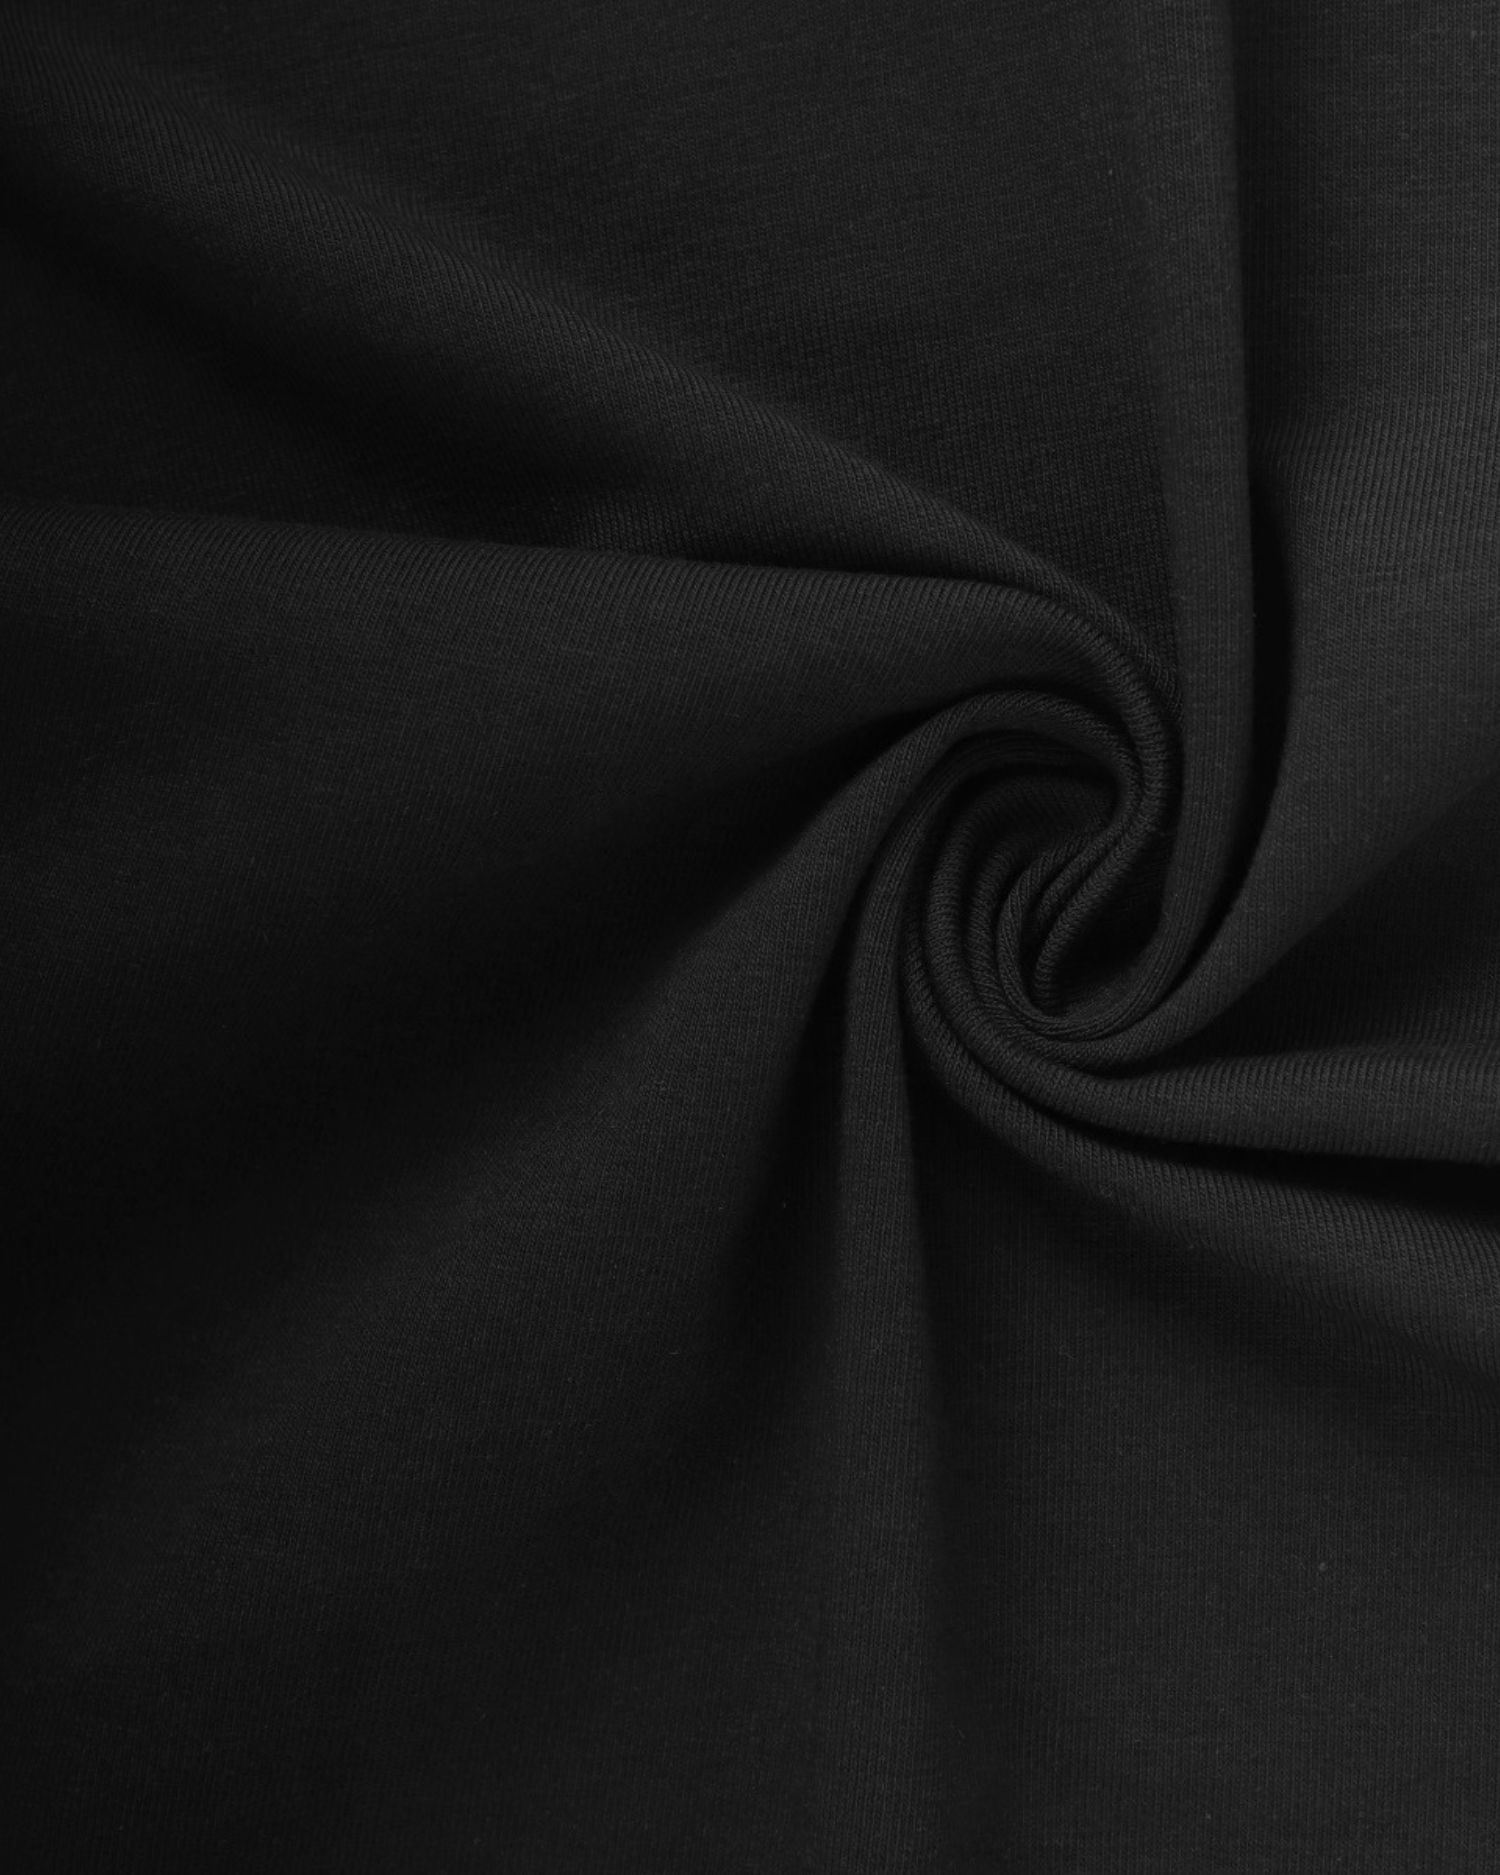 Bavlněný úplet s elastanem, 1 metr, 185gr/m2, černý